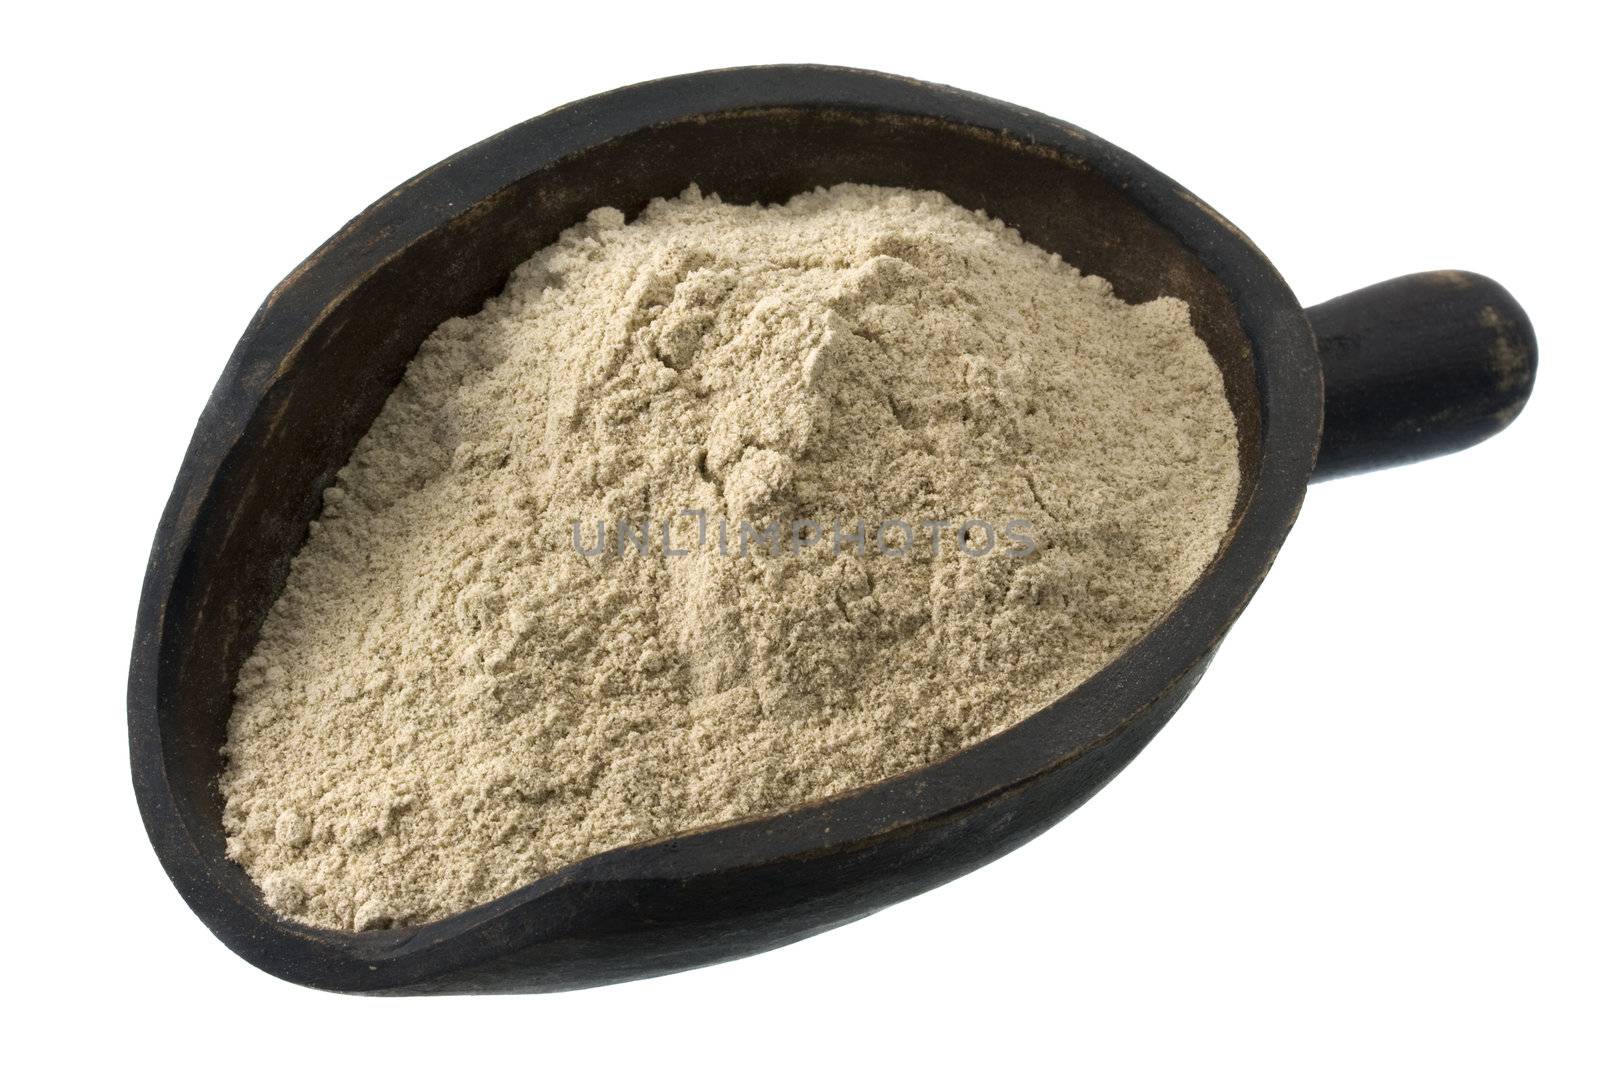 scoop of buckwheat flour by PixelsAway